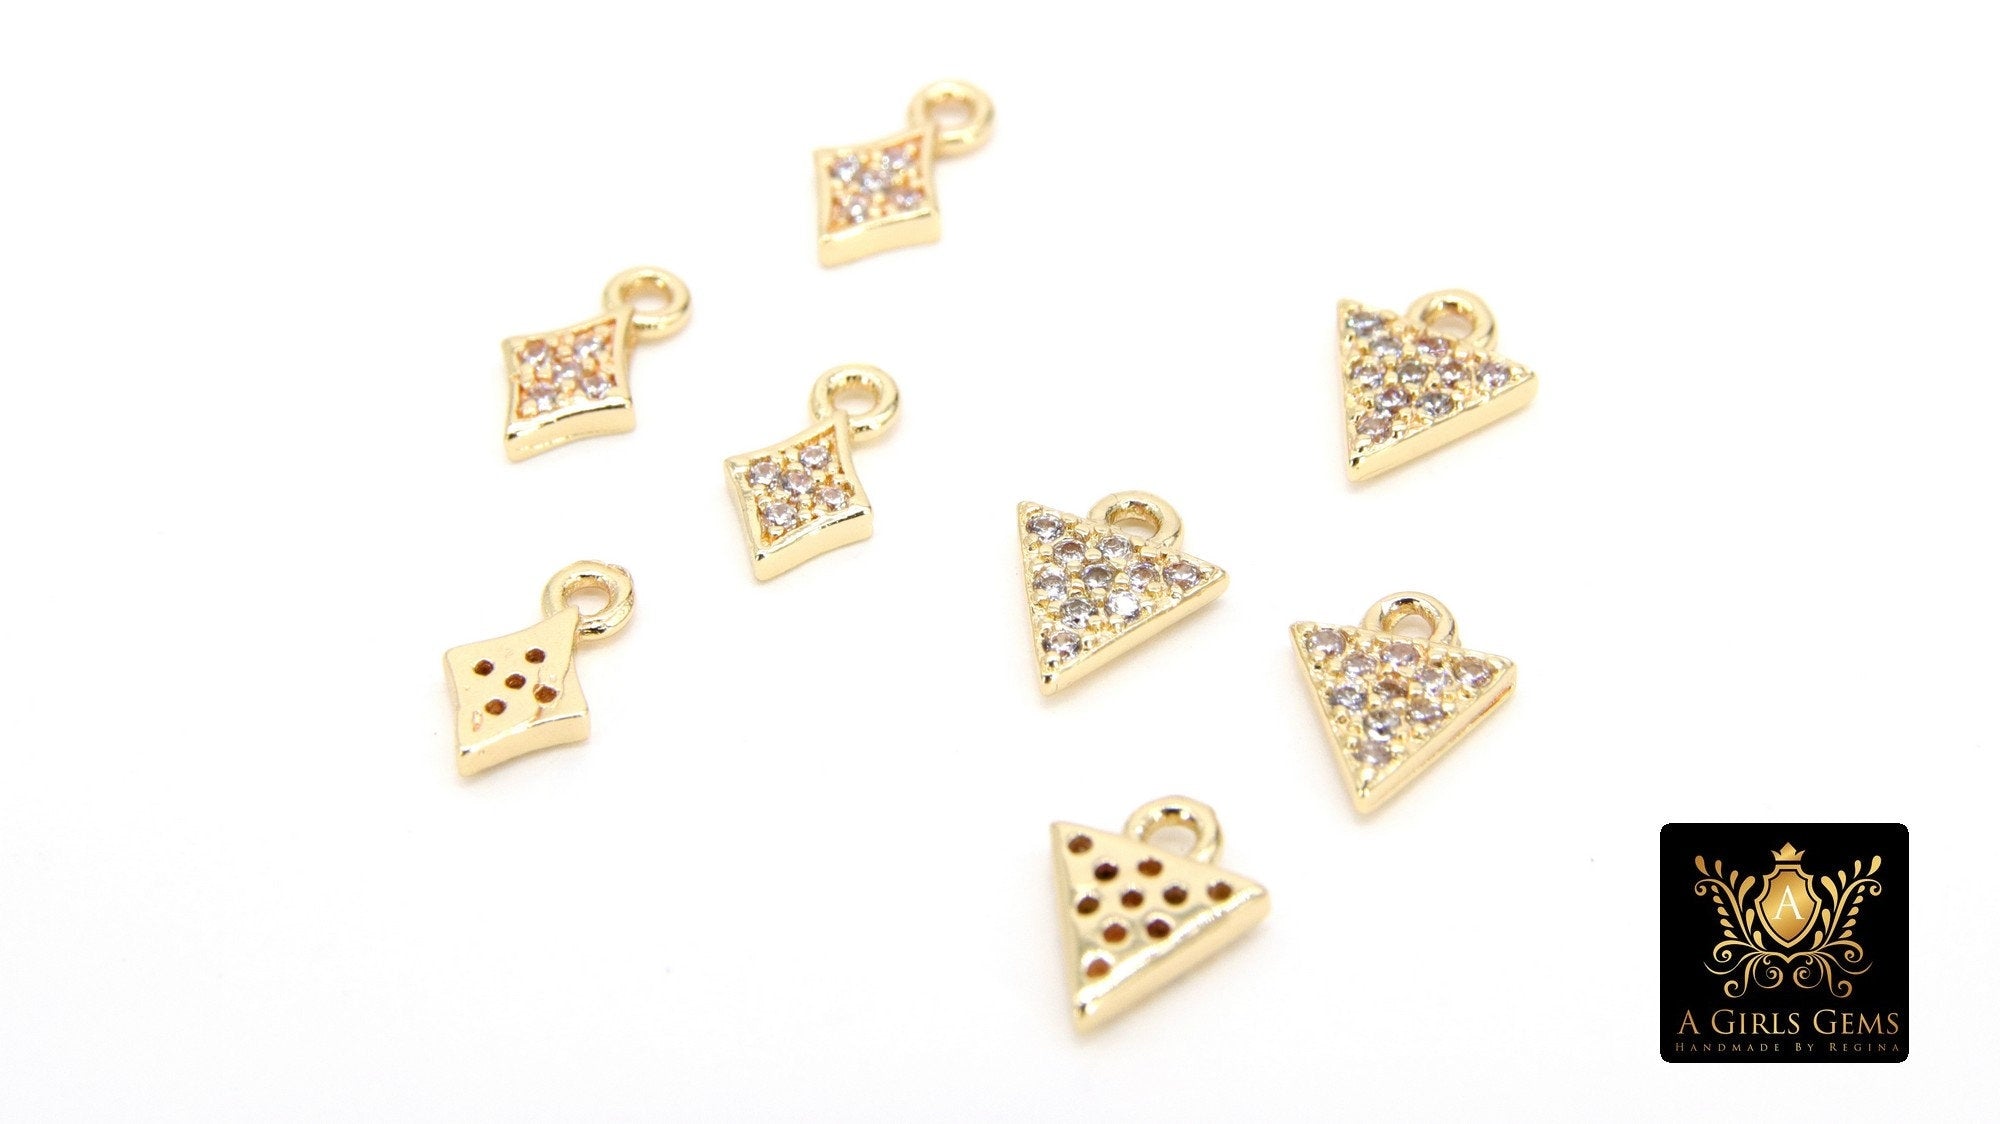 CZ Pave Gold Triangle Charms, 2 Pcs Tiny Diamond Shape Charms #122, Tiny Gold Plated 8 mm Minimalist Charms